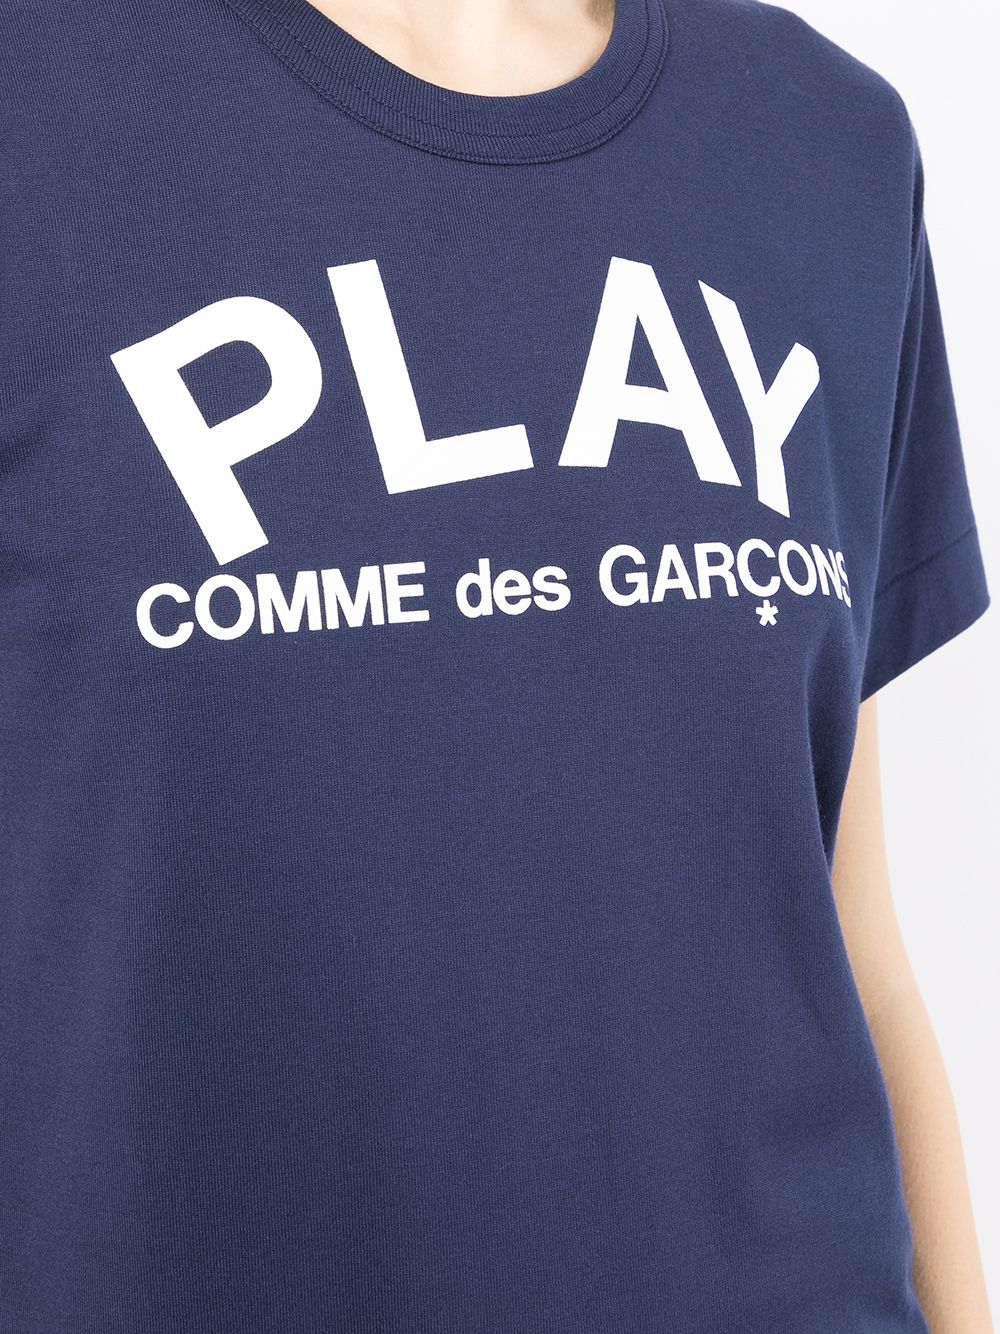 фото Comme des garçons play футболка с логотипом